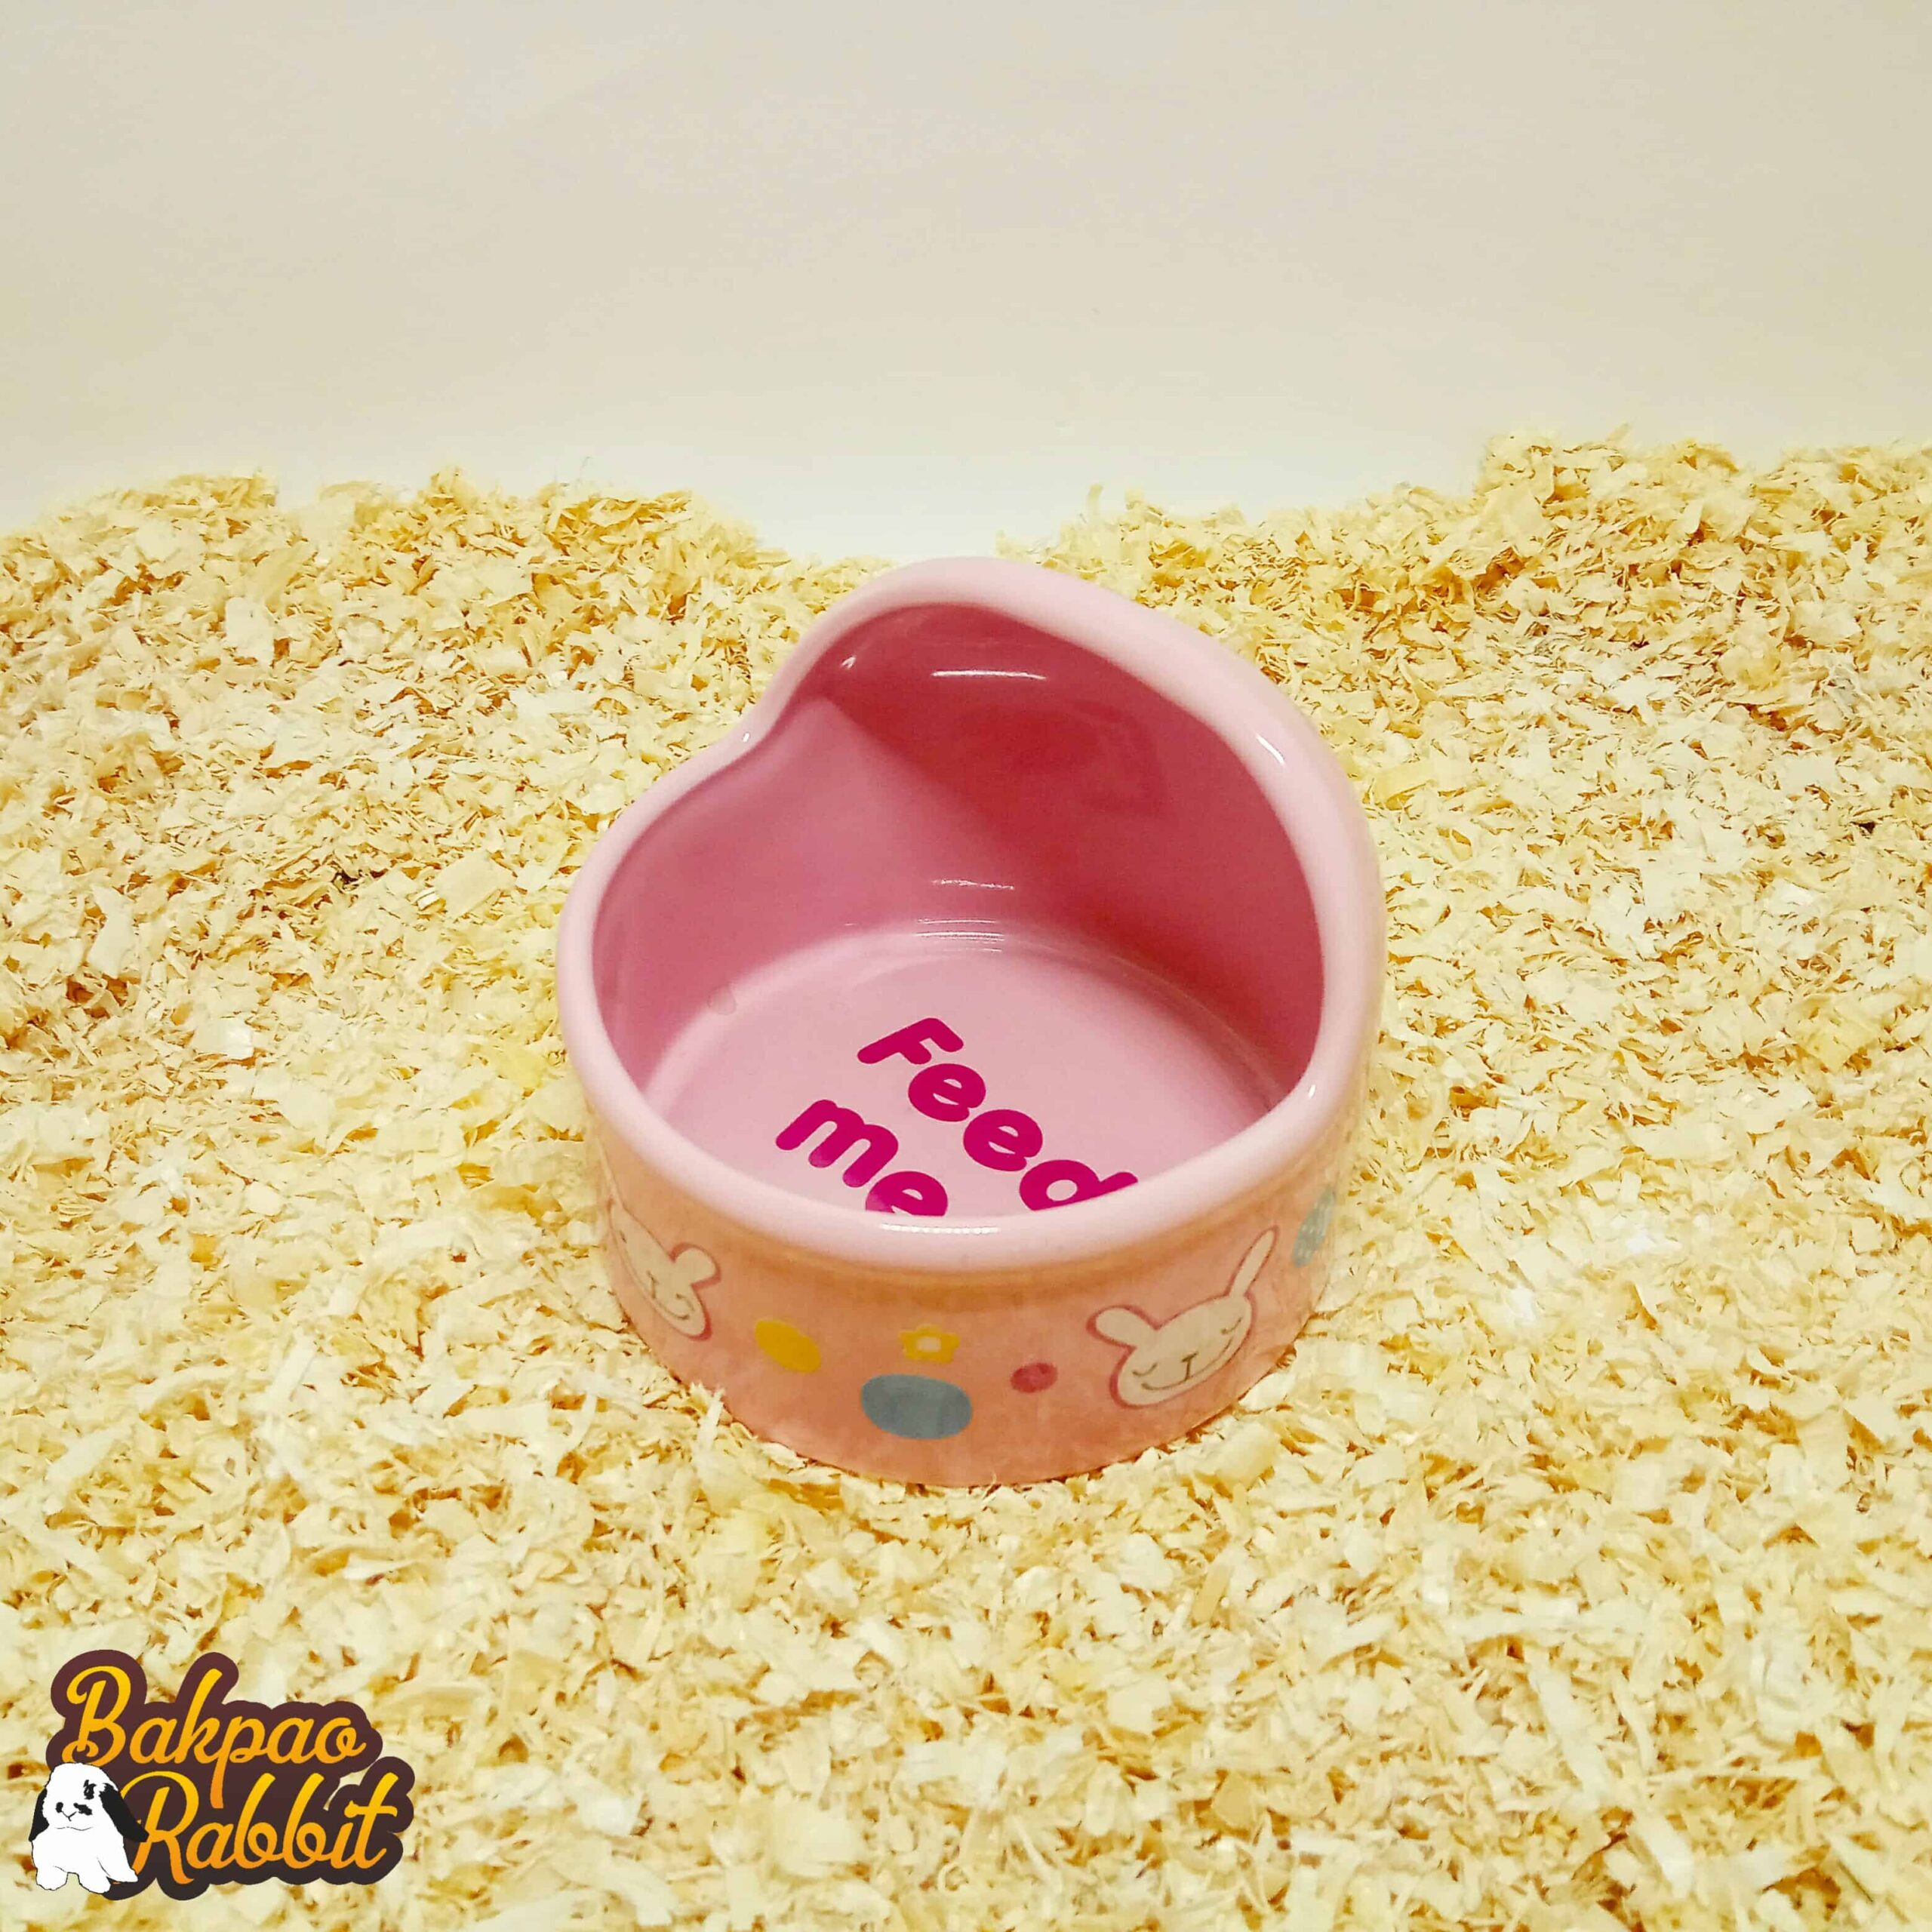 Jolly JP108 Dome Feeding Bowl Pink